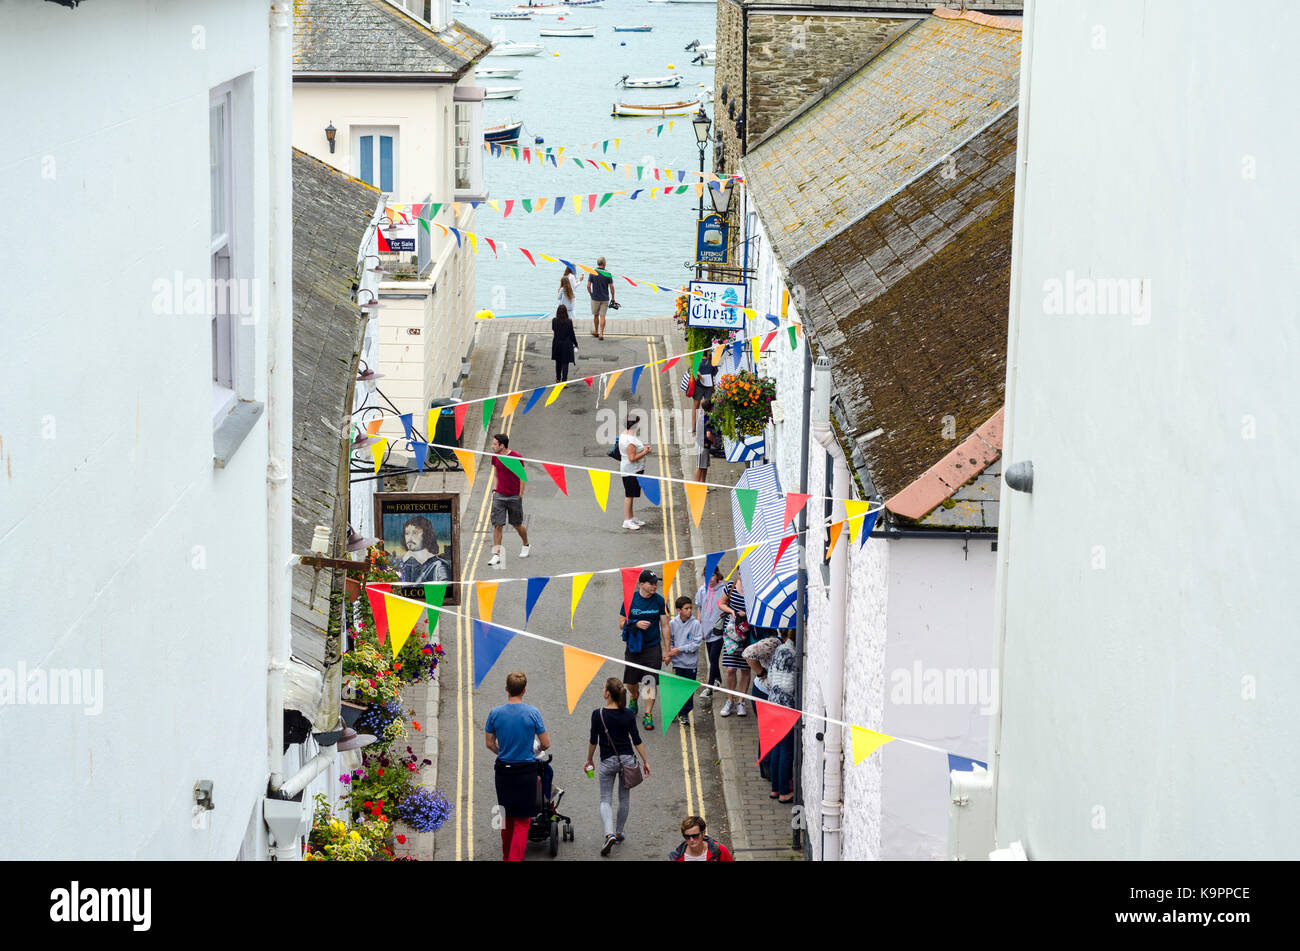 Street bunting traditional street scene, Salcombe English seaside resort town, South Devon, England, UK Stock Photo